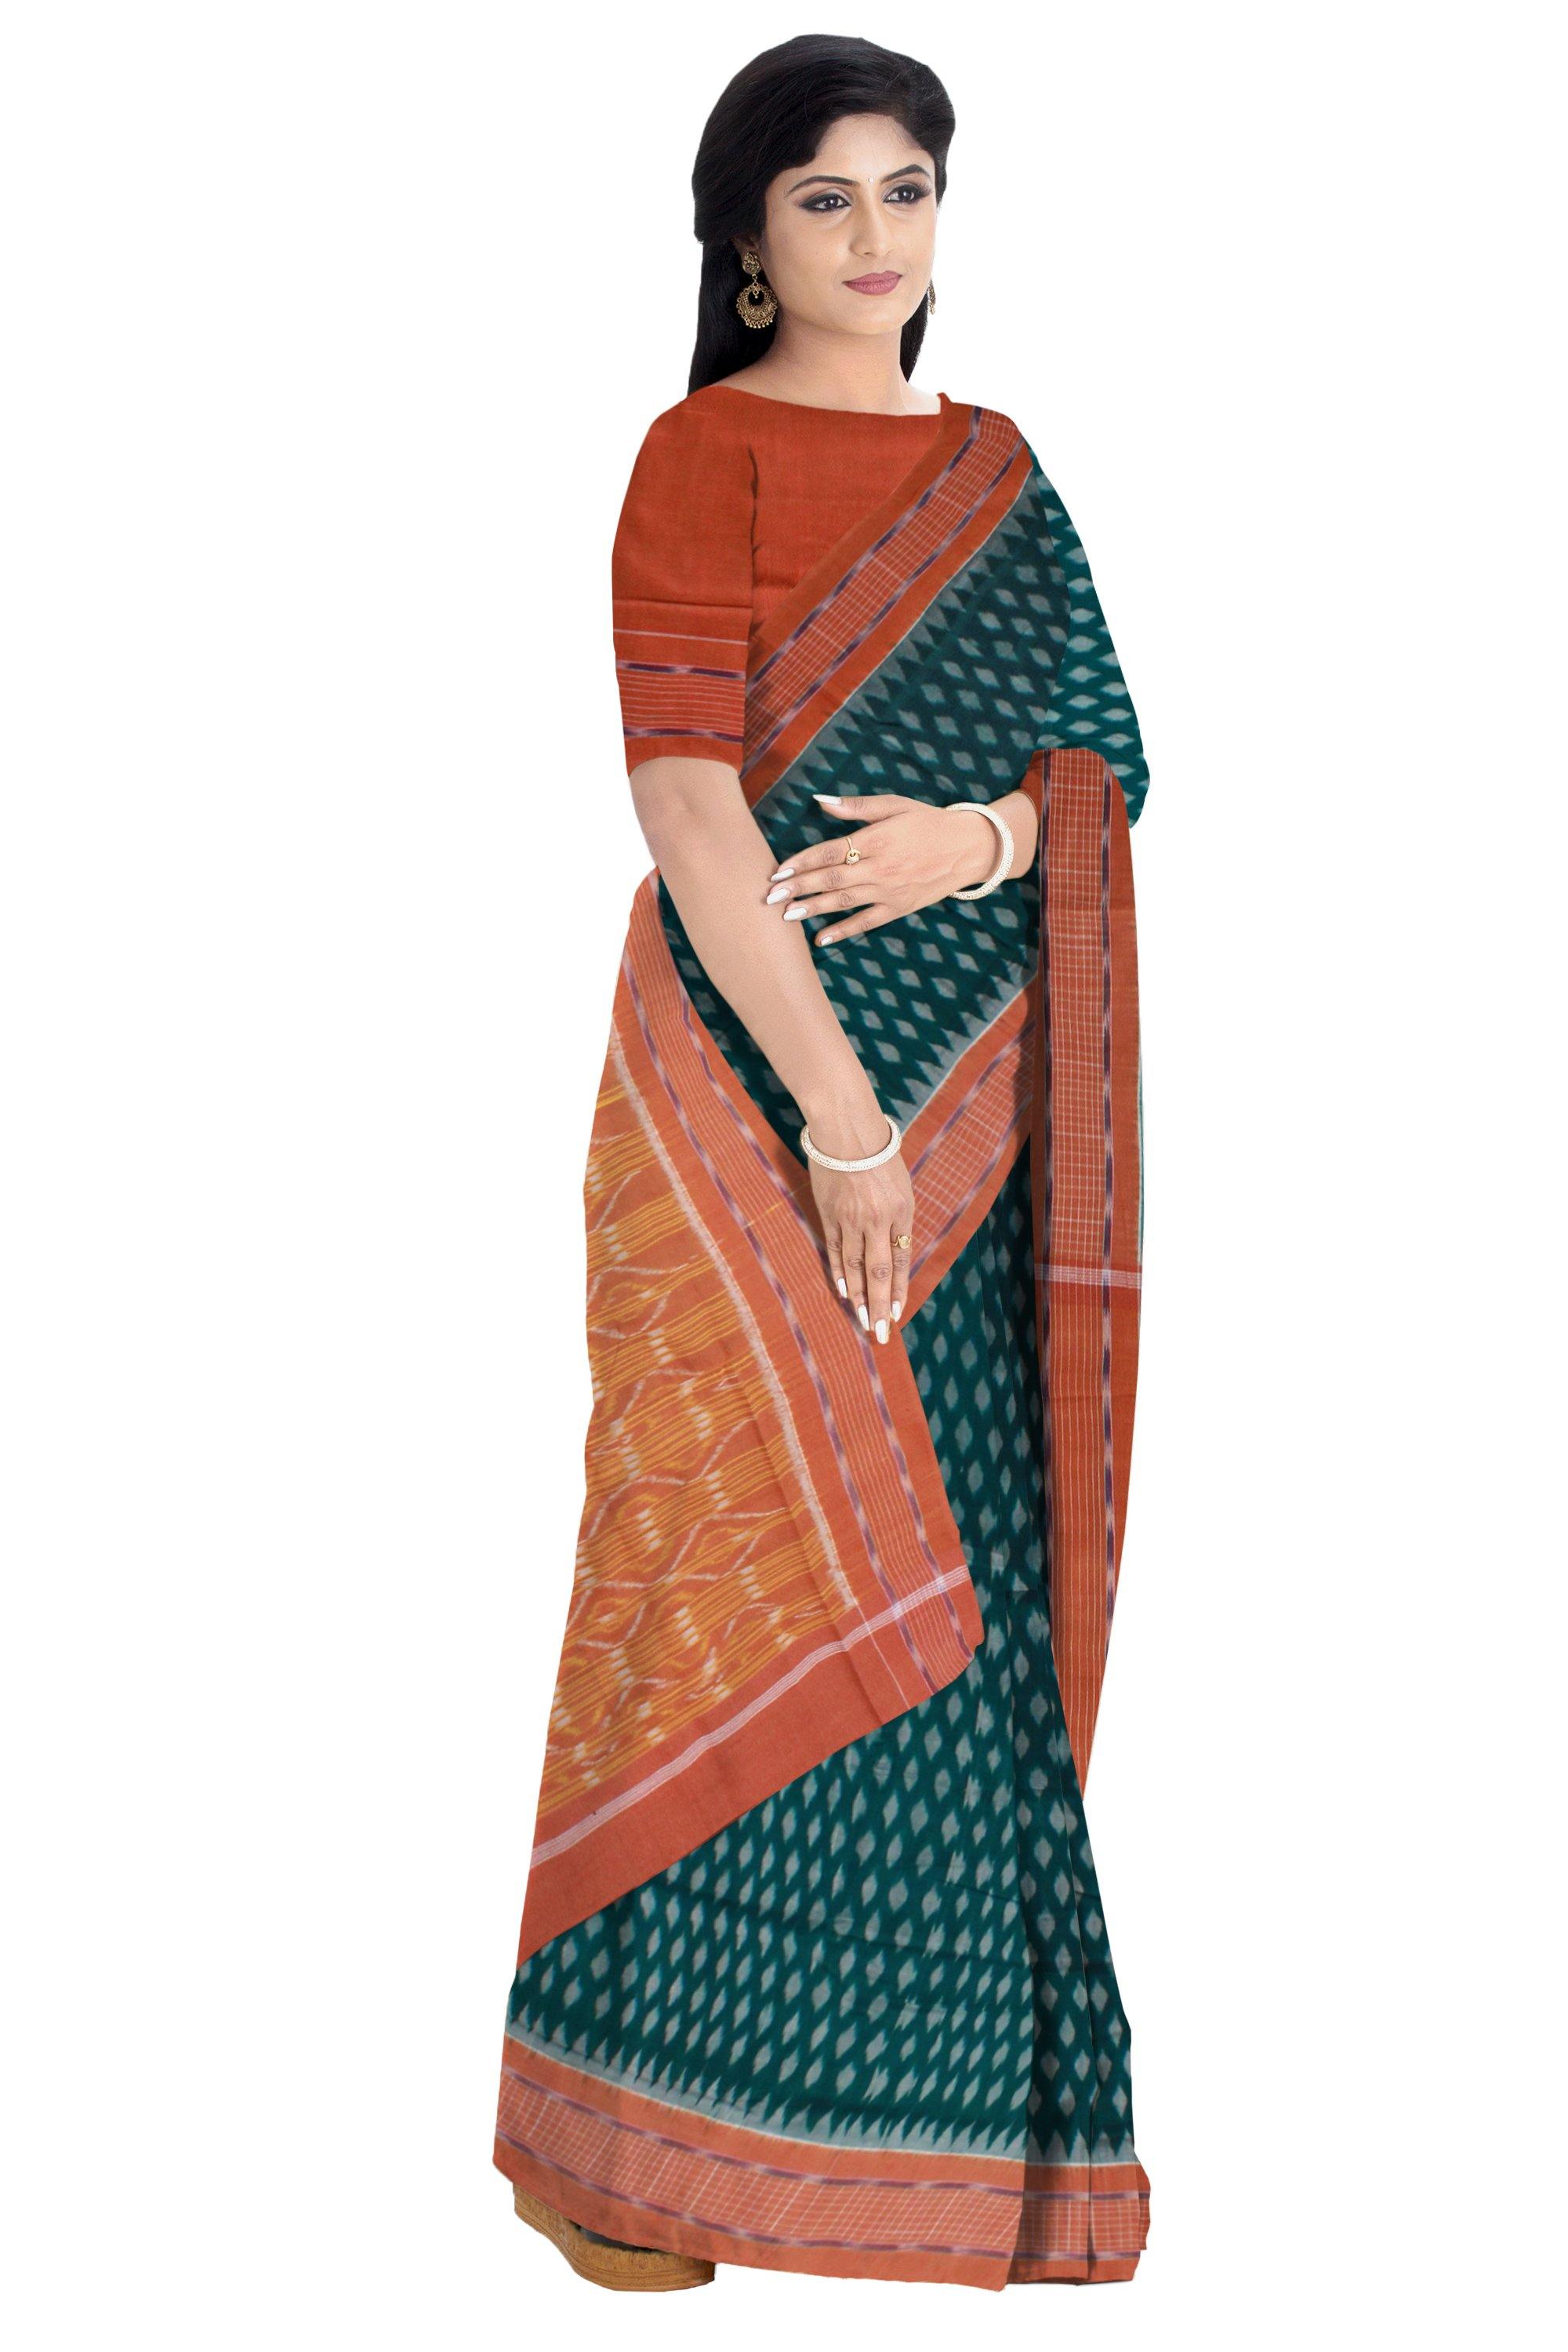 Latest design Sambalpuri cotton Saree in Green Color with blouse piece - Koshali Arts & Crafts Enterprise